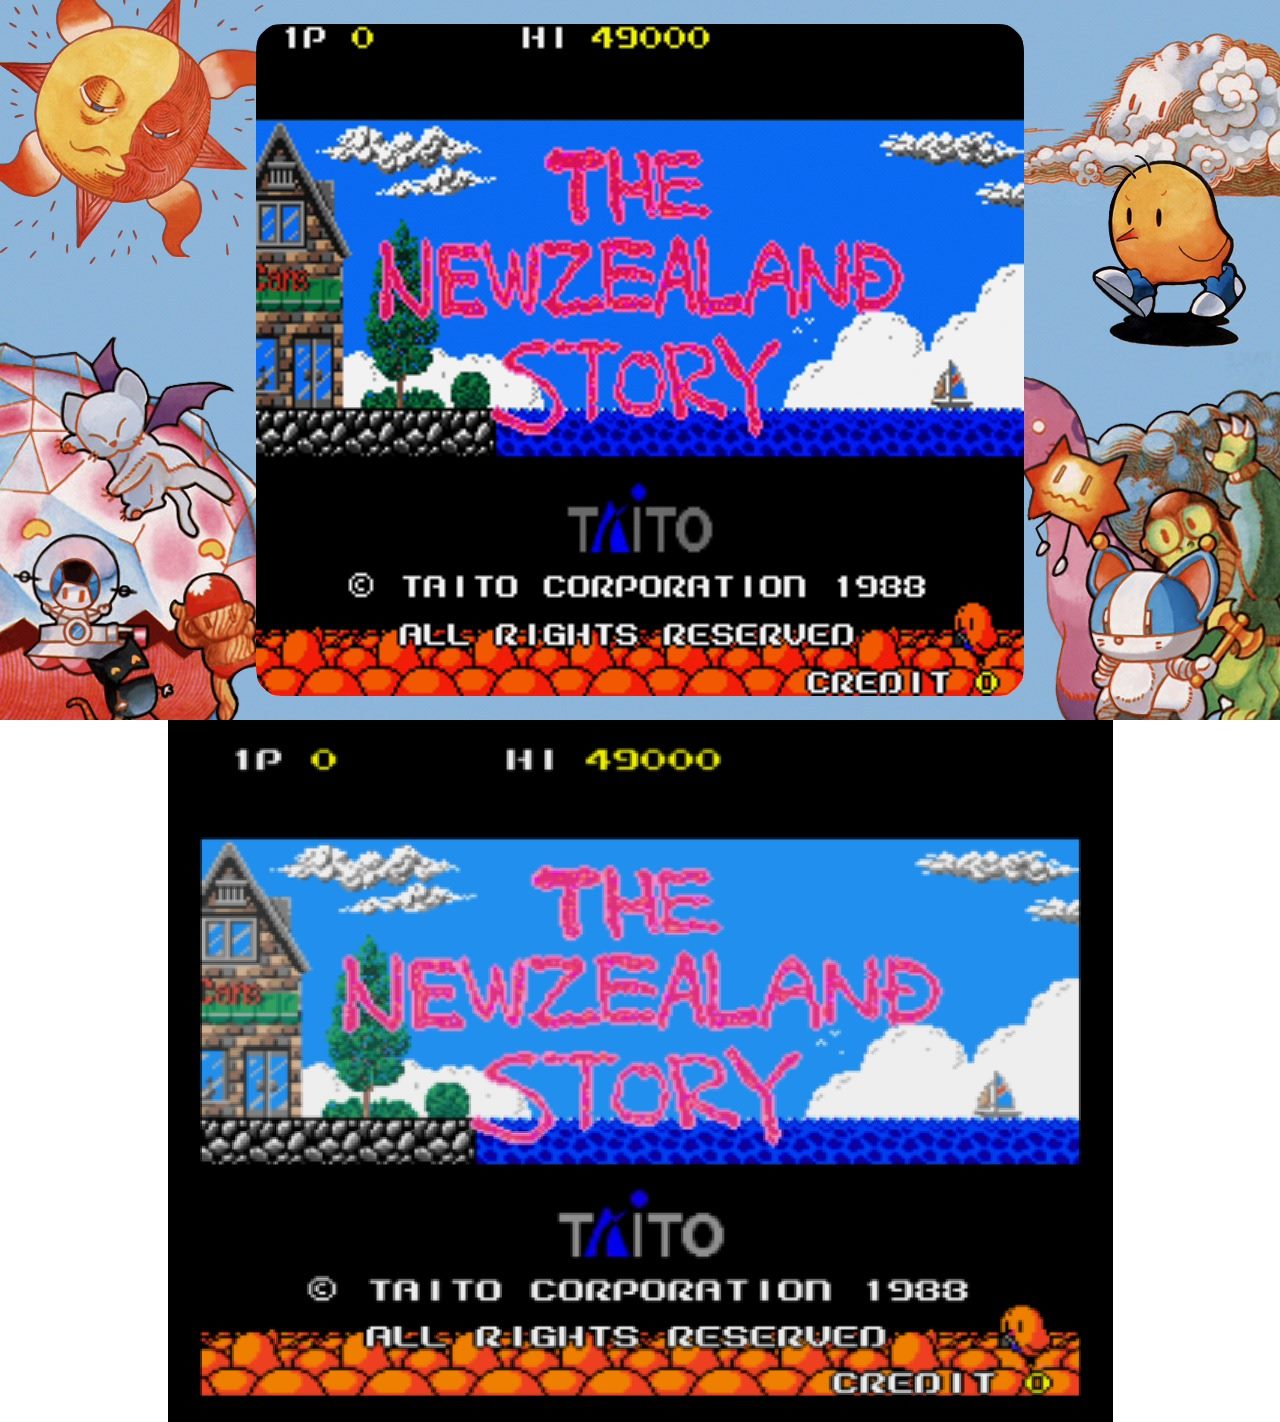 Egret II Mini收錄的《紐西故事》（上圖）顯示比例並非4:3，PlayStation 2平台Taito Memories合集收錄的版本（下圖）顯示比例較接近4:3。